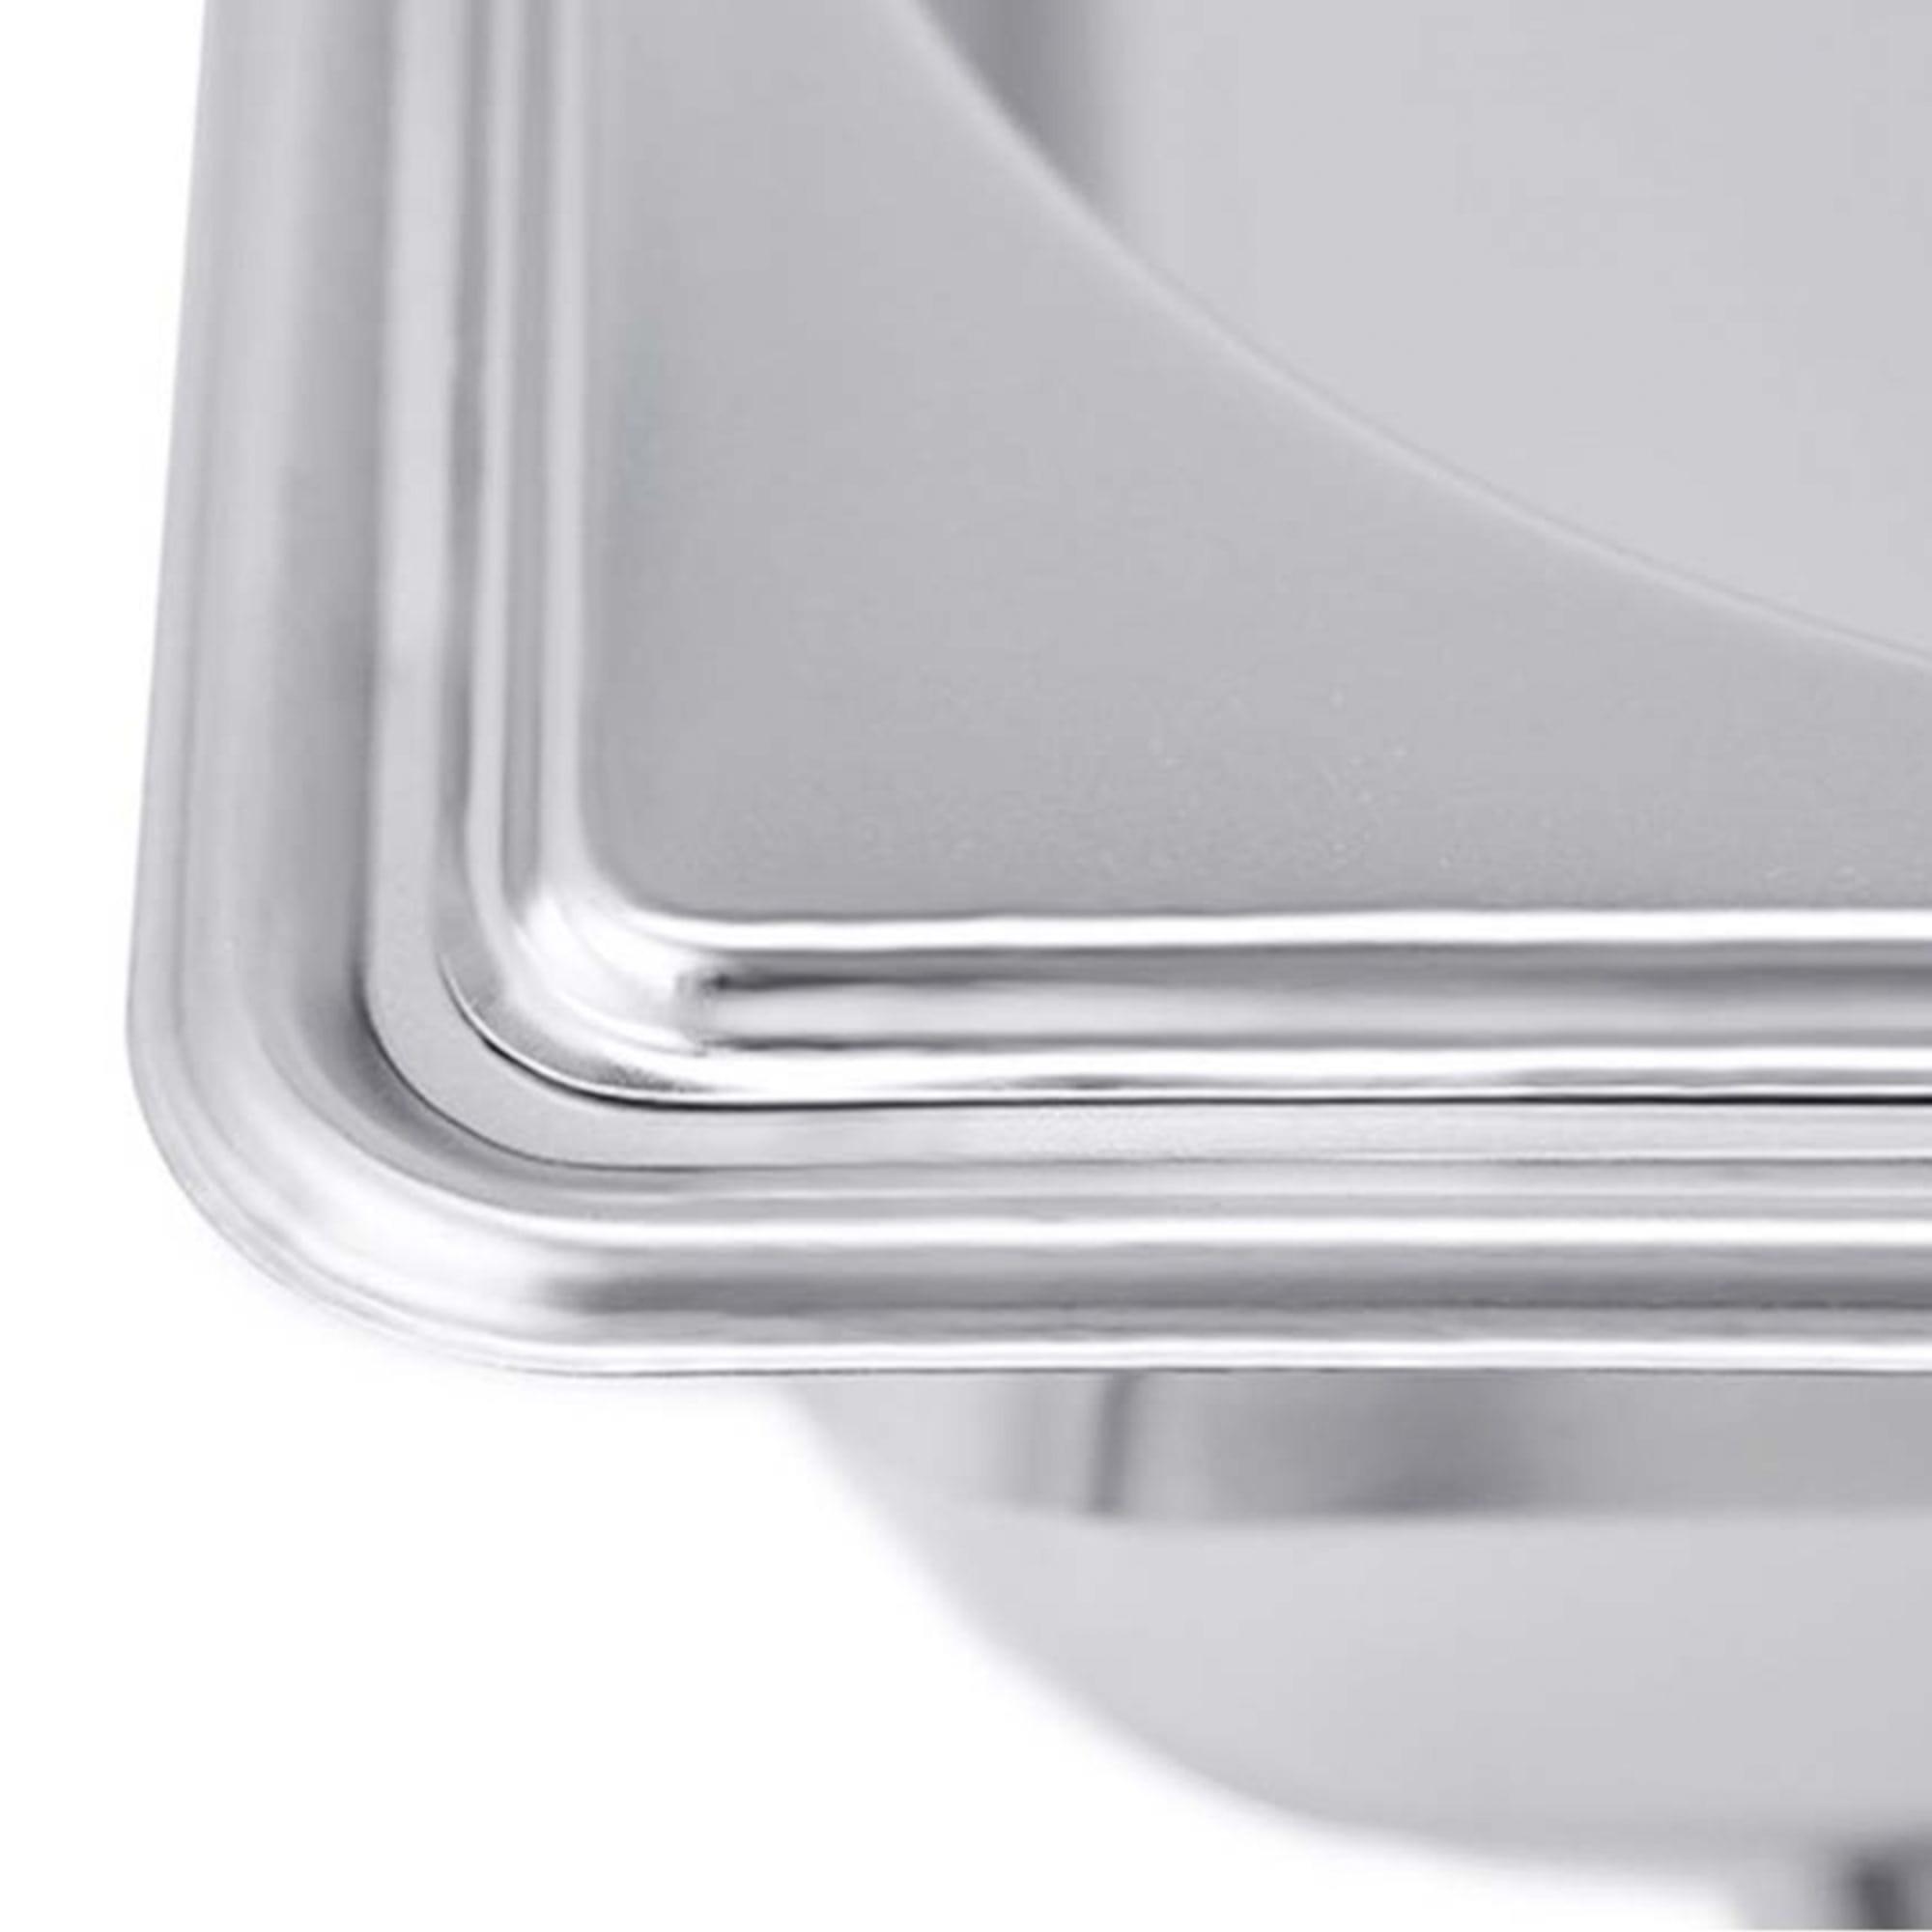 Soga Rectangular Stainless Steel 2 Pans Chafing Dish 60.5x36cm Set of 2 Image 3